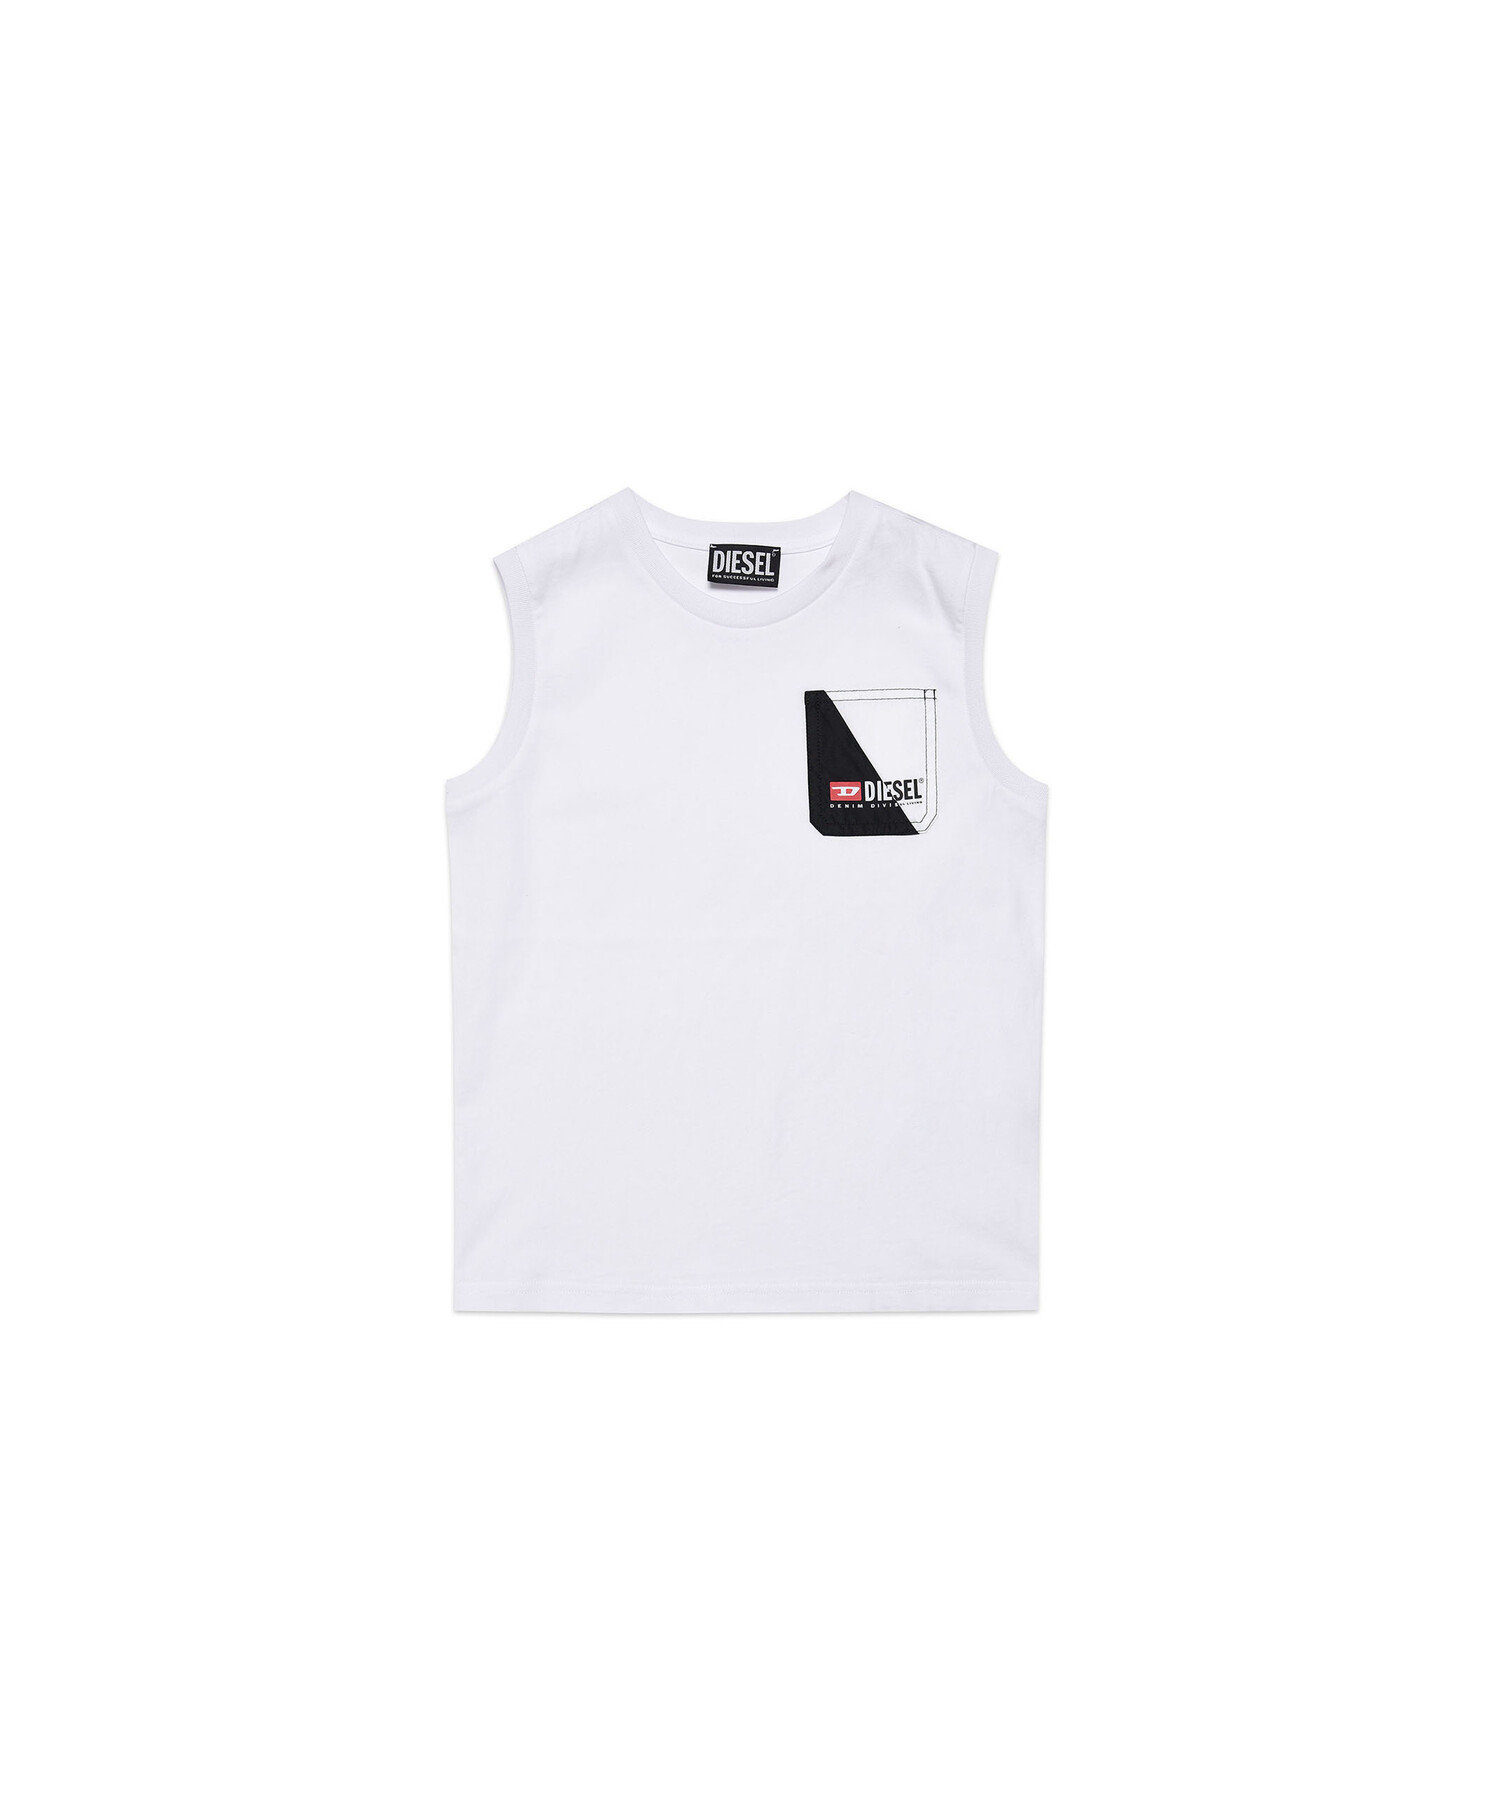 DIESELDIESEL KID ジュニア Tシャツ タンクトップ 新発売の 誠実 ノースリーブ ロゴ 異素材 胸ポケット